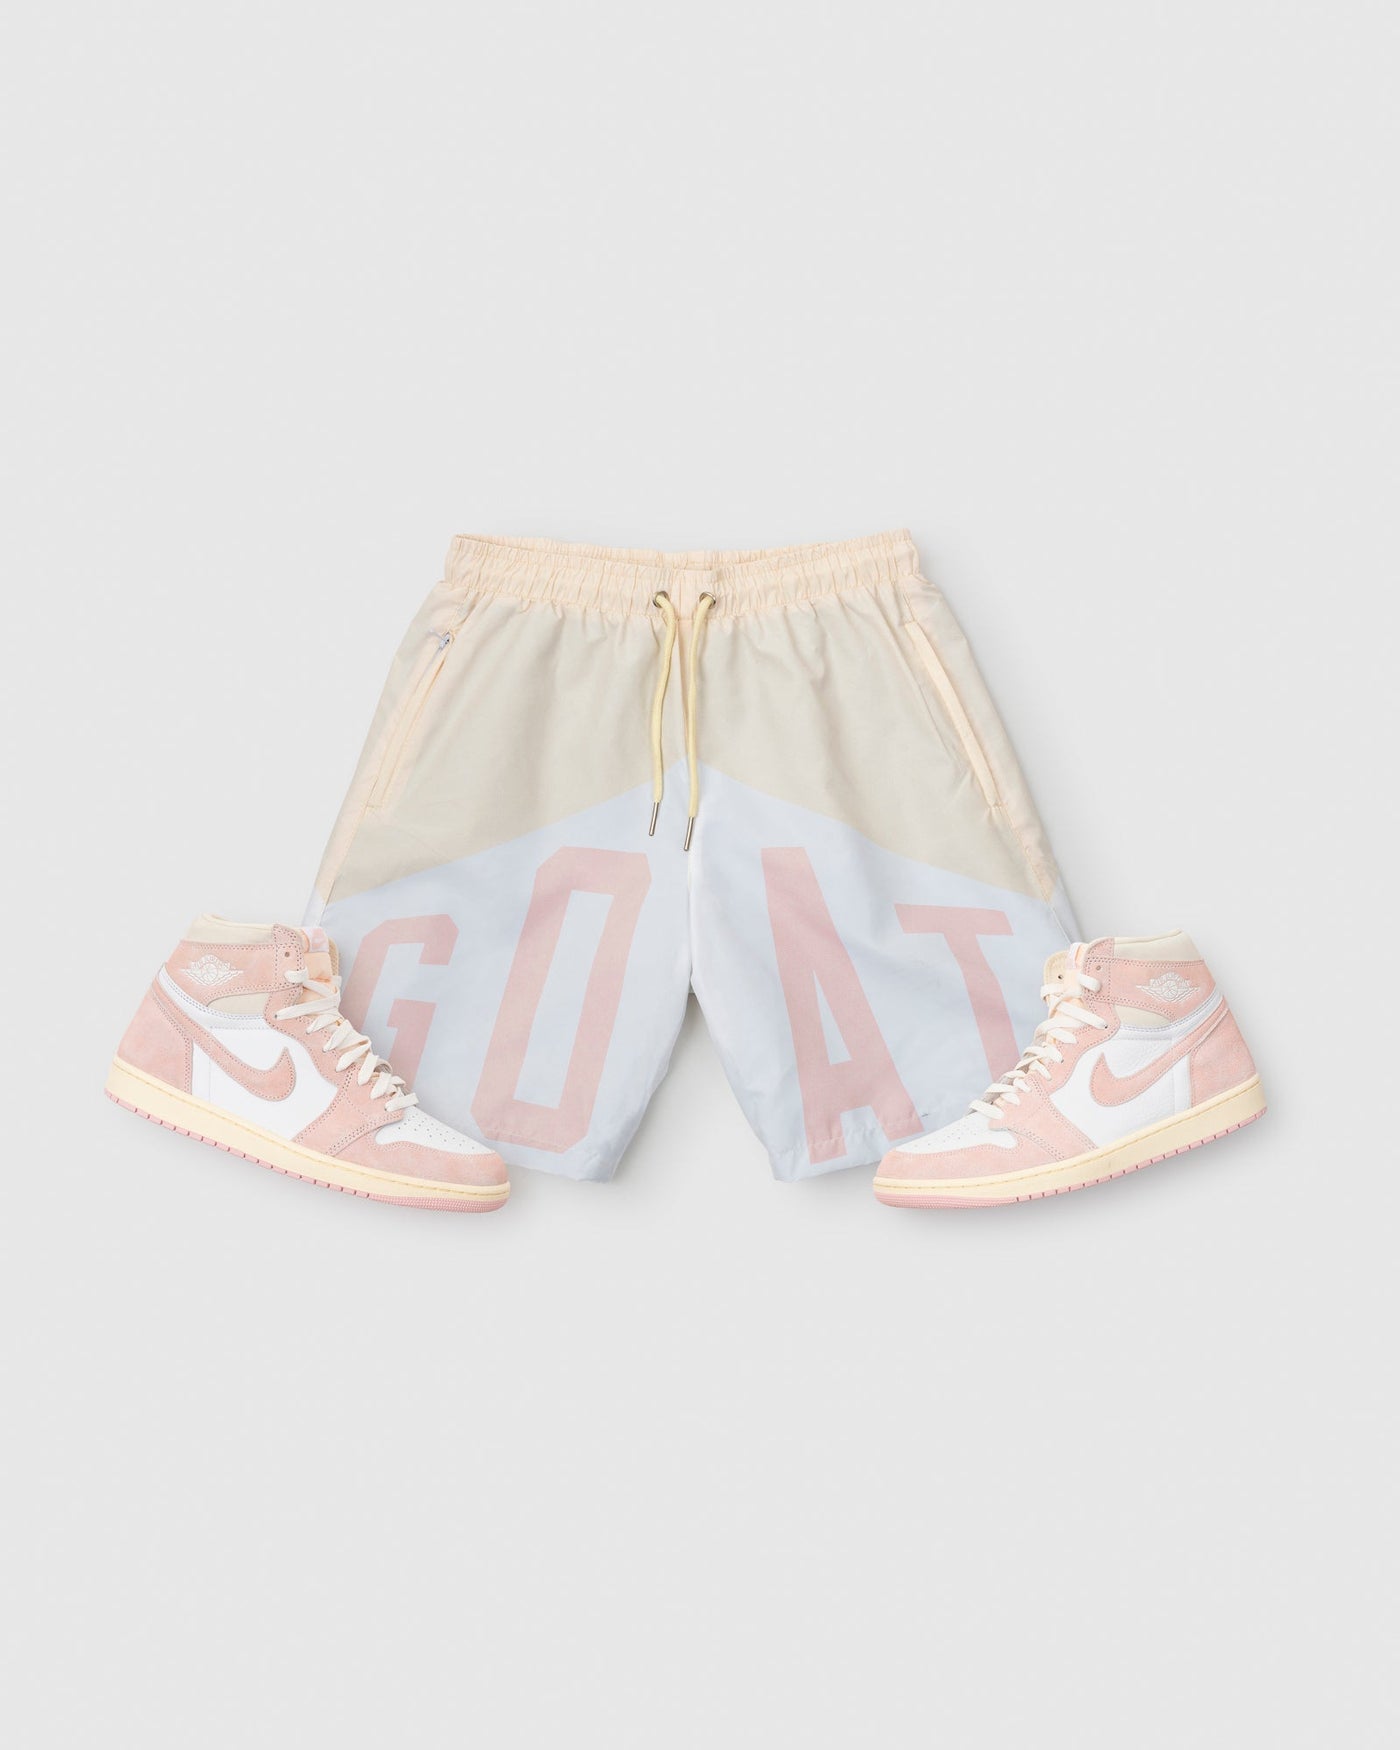 GOAT Big Arch Logo Shorts (Sail/Washed Pink)